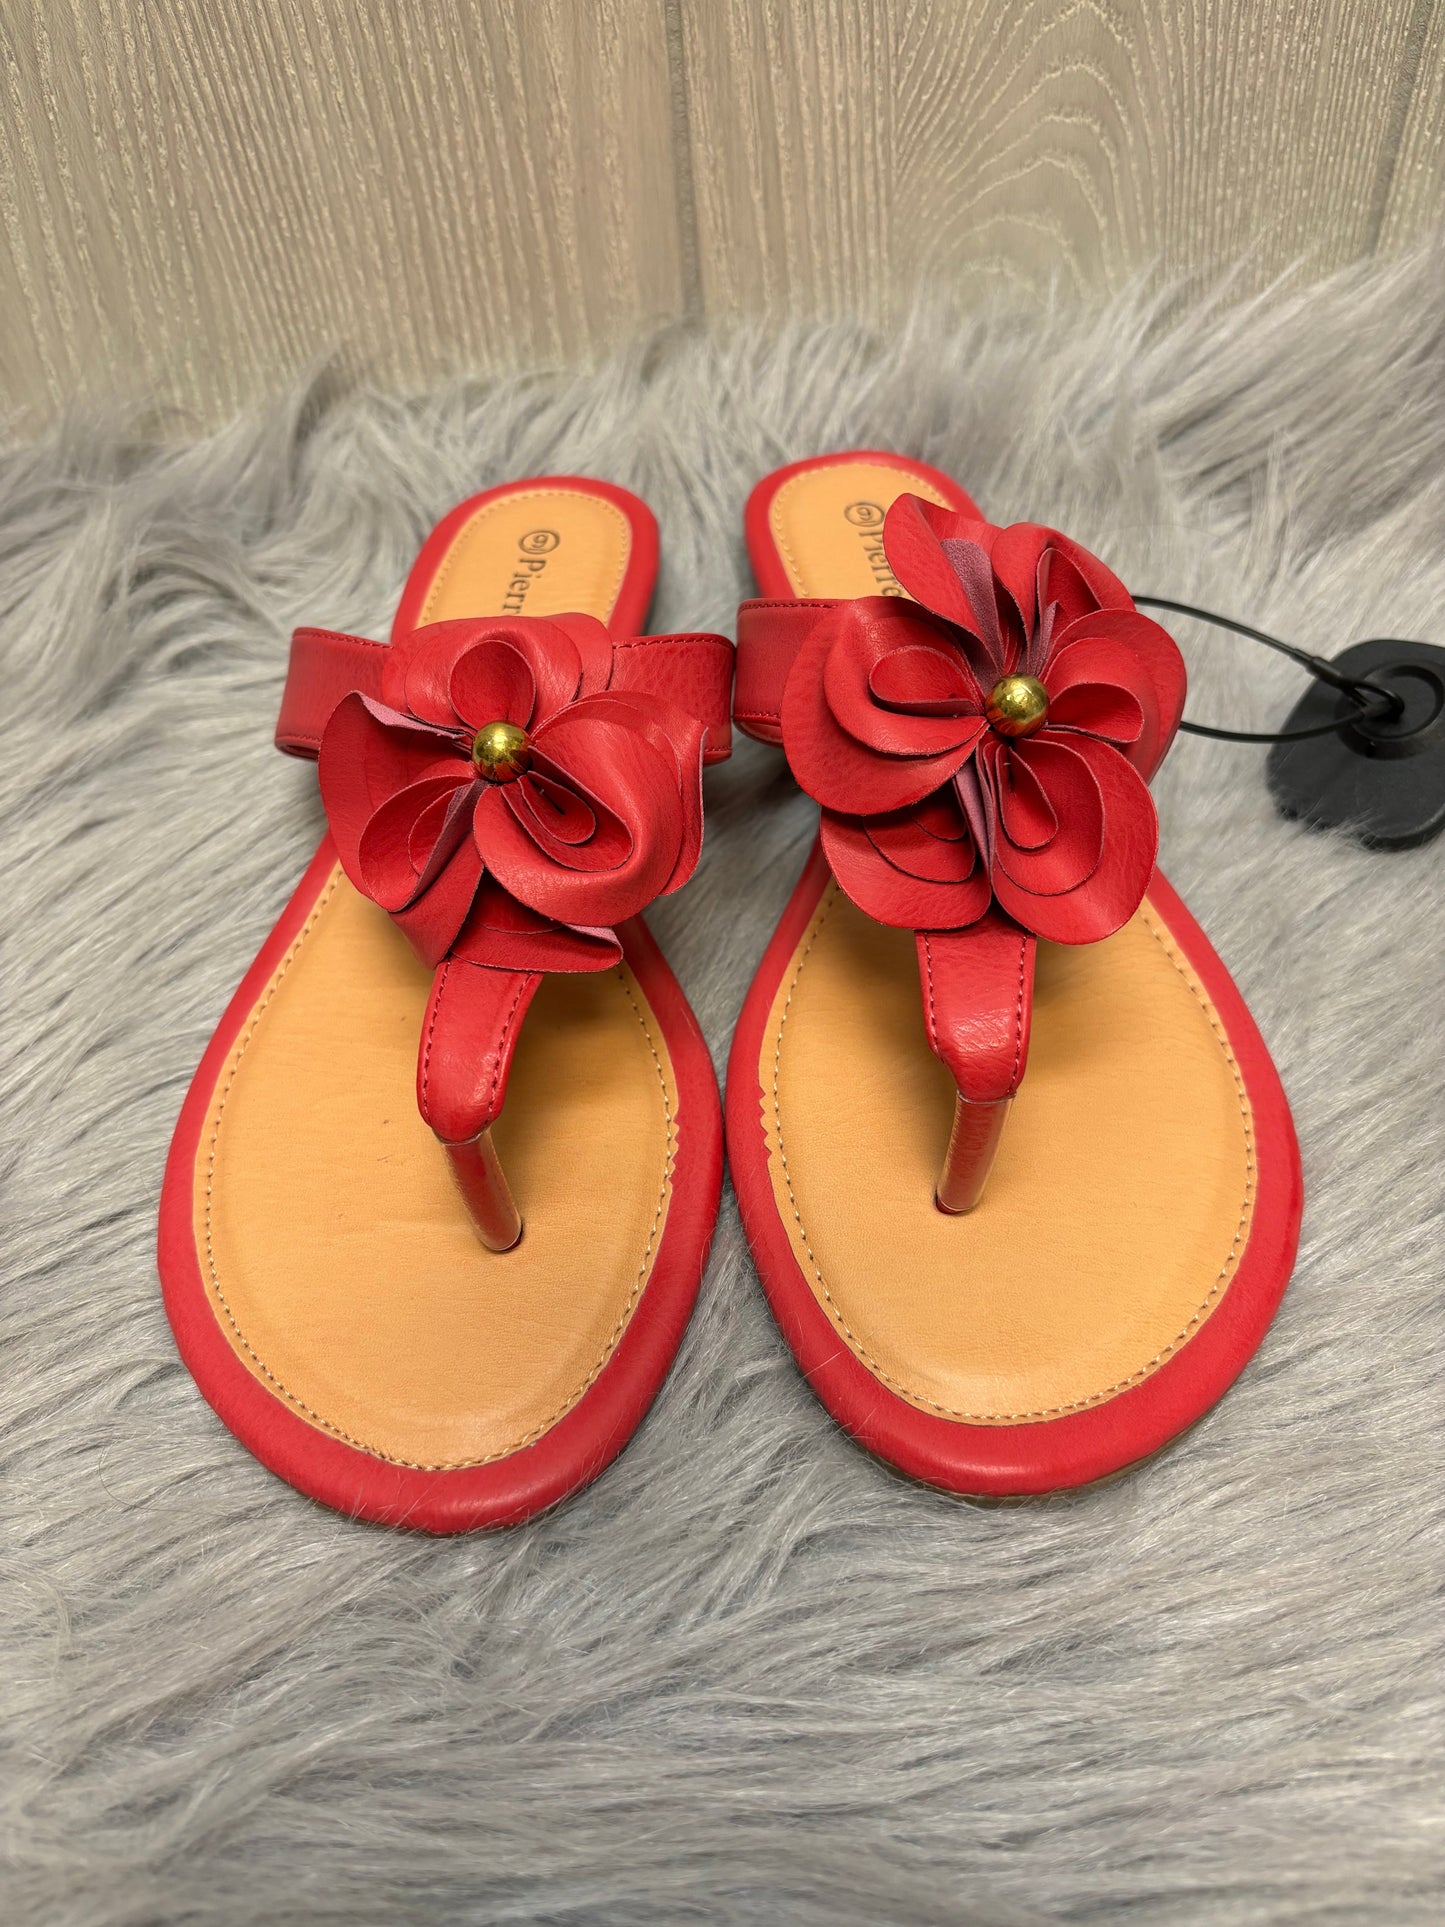 Pink & Tan Sandals Flats Pierre Dumas, Size 9